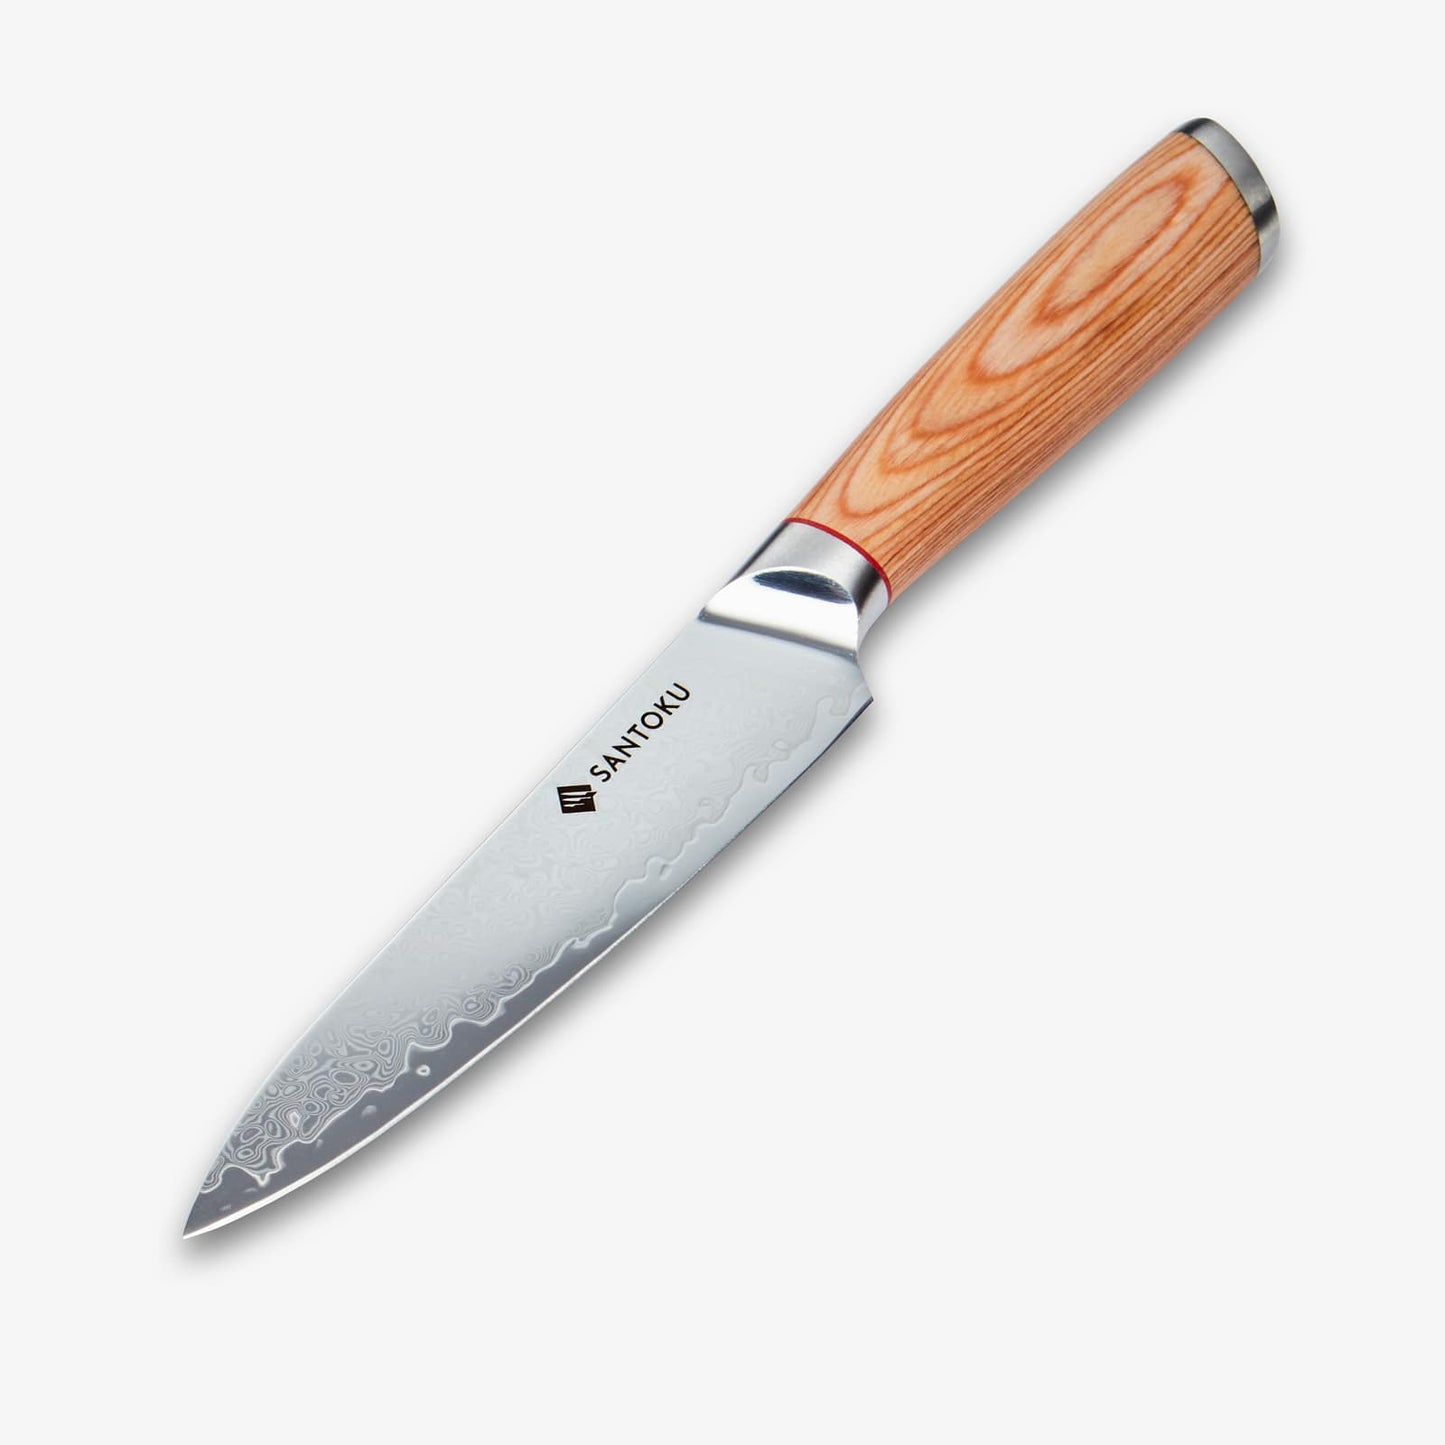 Haruta (はるた)  5 inch Utility Knife